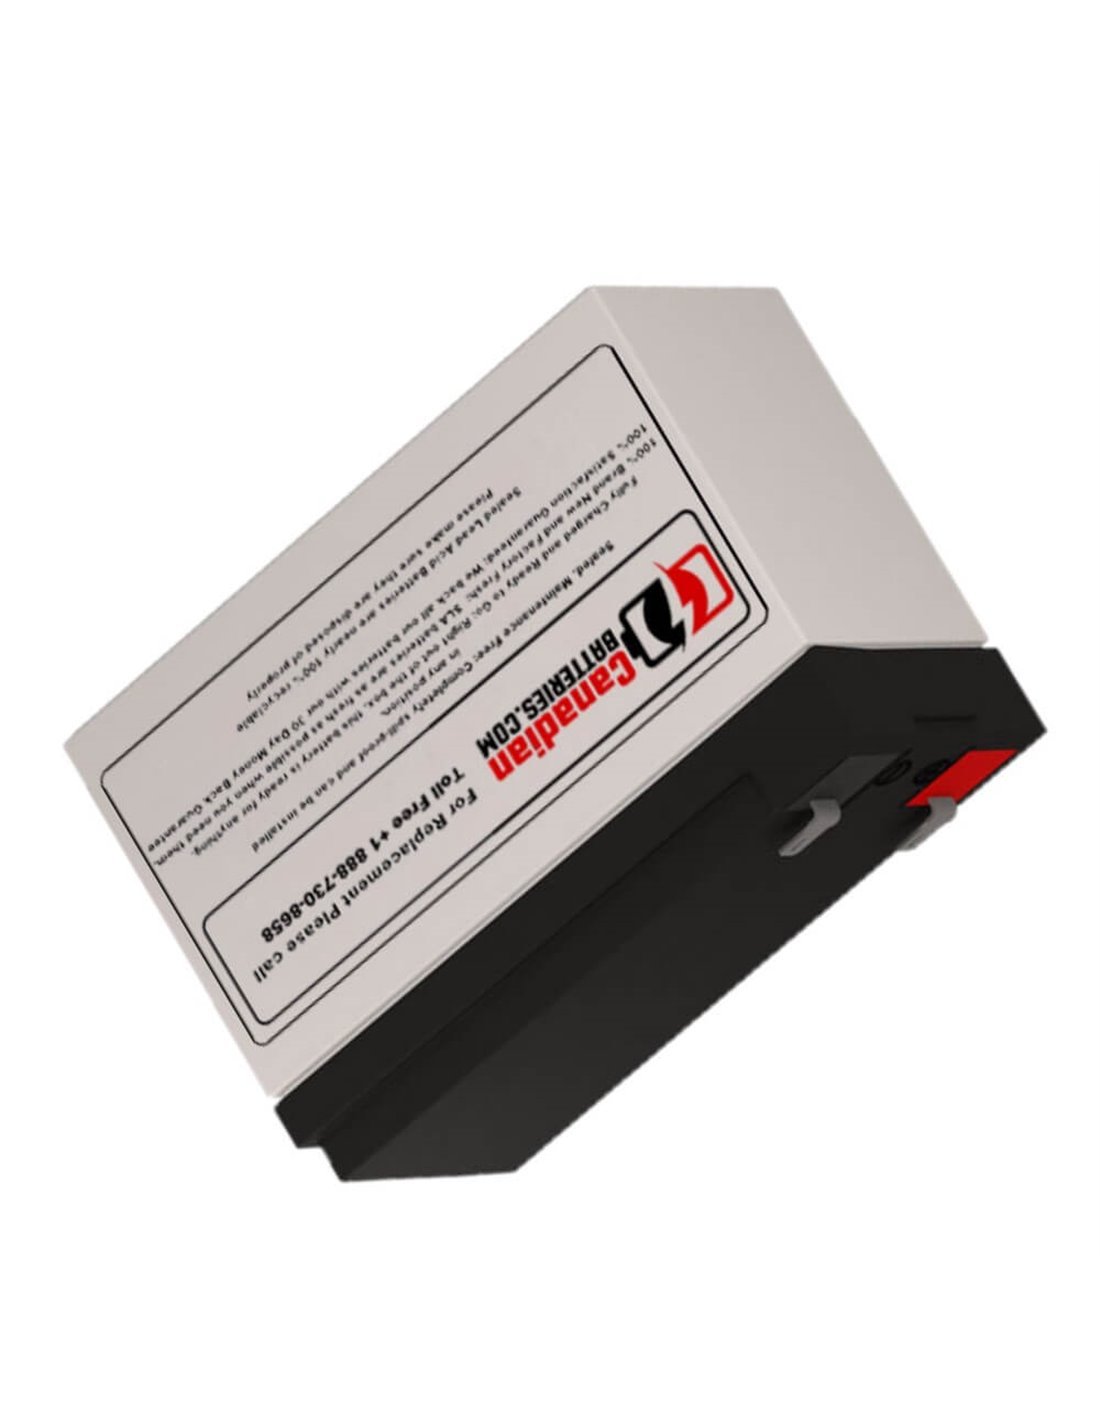 Battery for Powercom Kin-625ap UPS, 1 x 12V, 7Ah - 84Wh